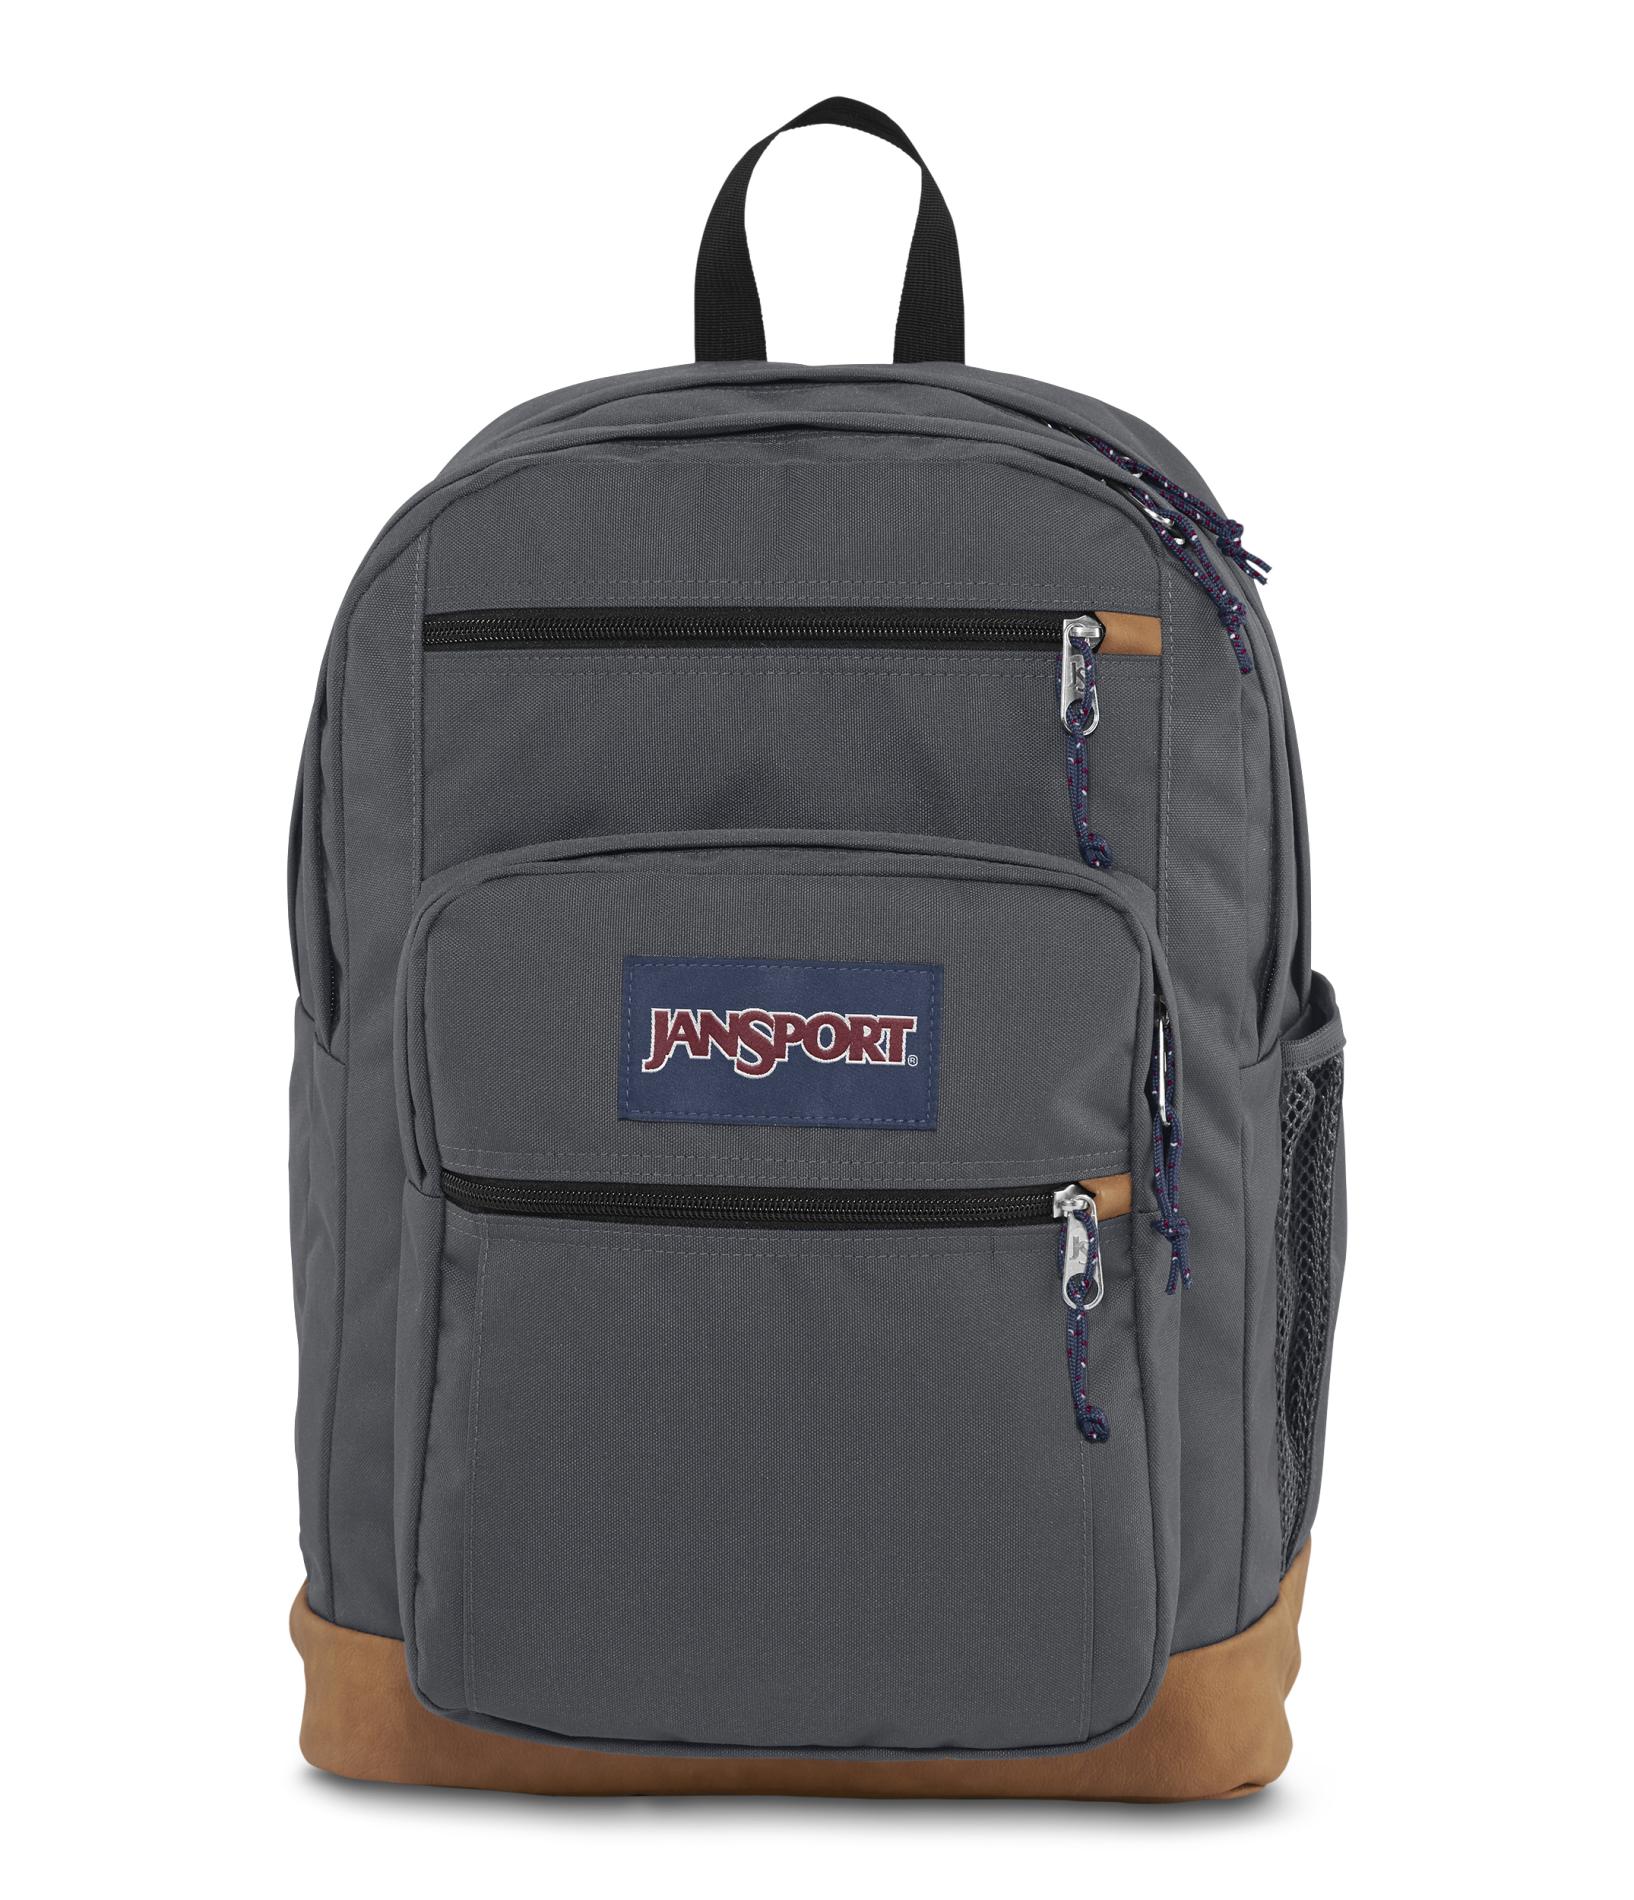 sears jansport backpack